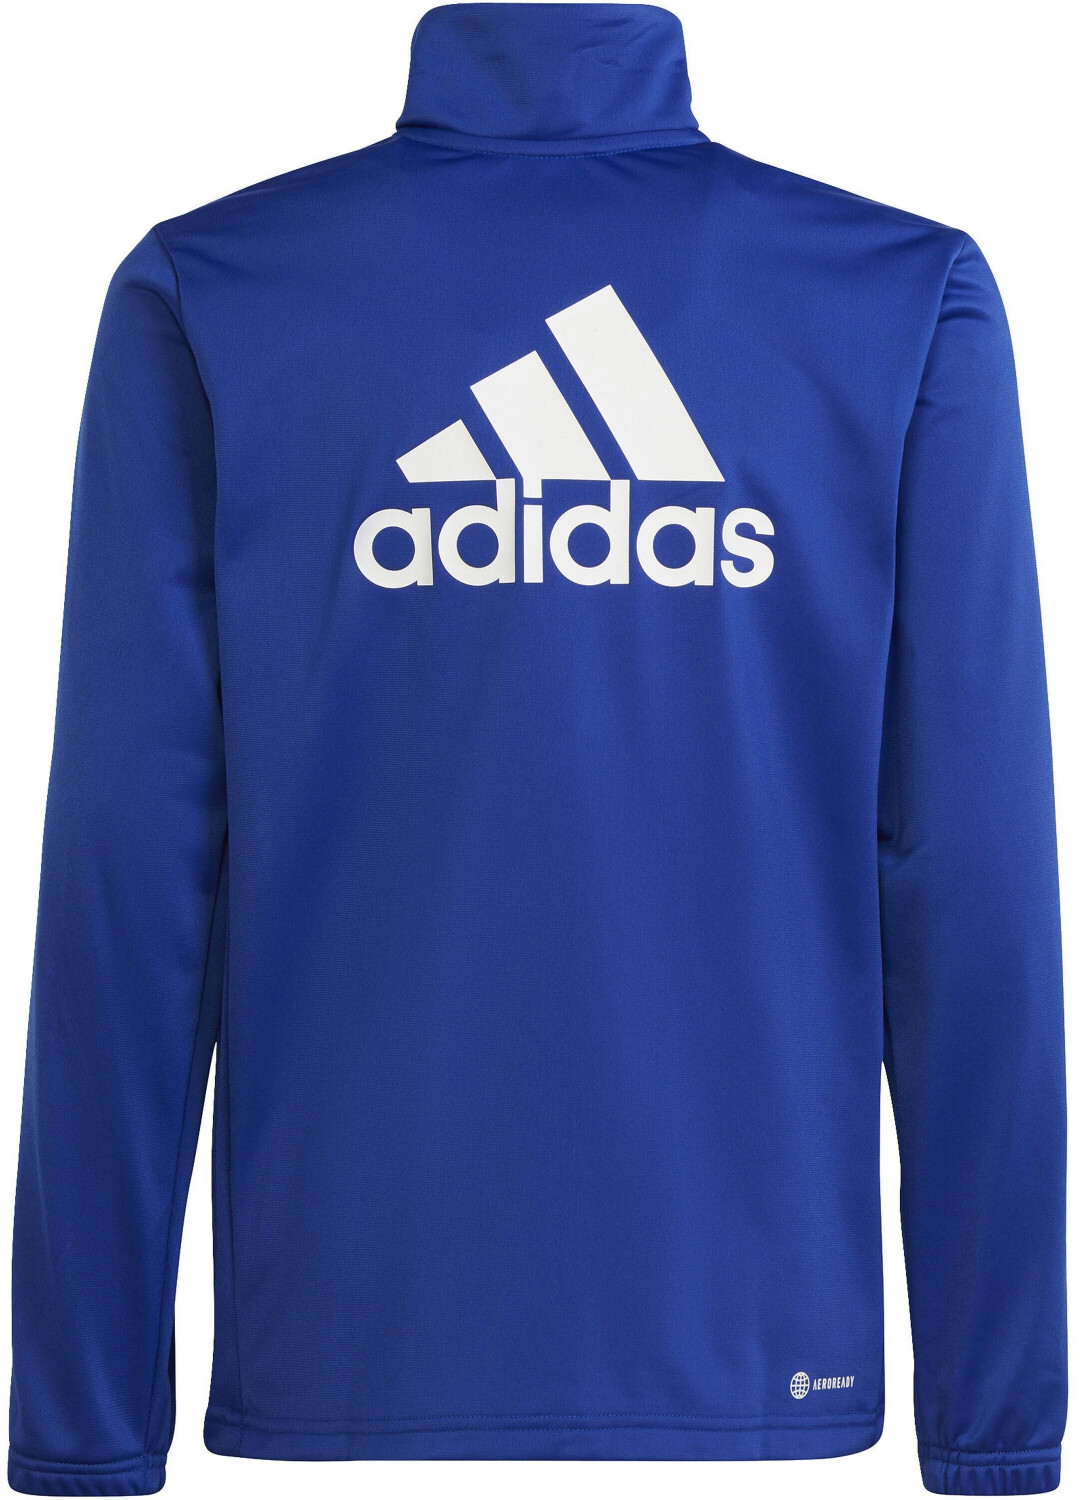 Adidas Boys Tracksuit (HR6408) semi 34,49 Preisvergleich blue/white/legend | € lucid ab ink bei